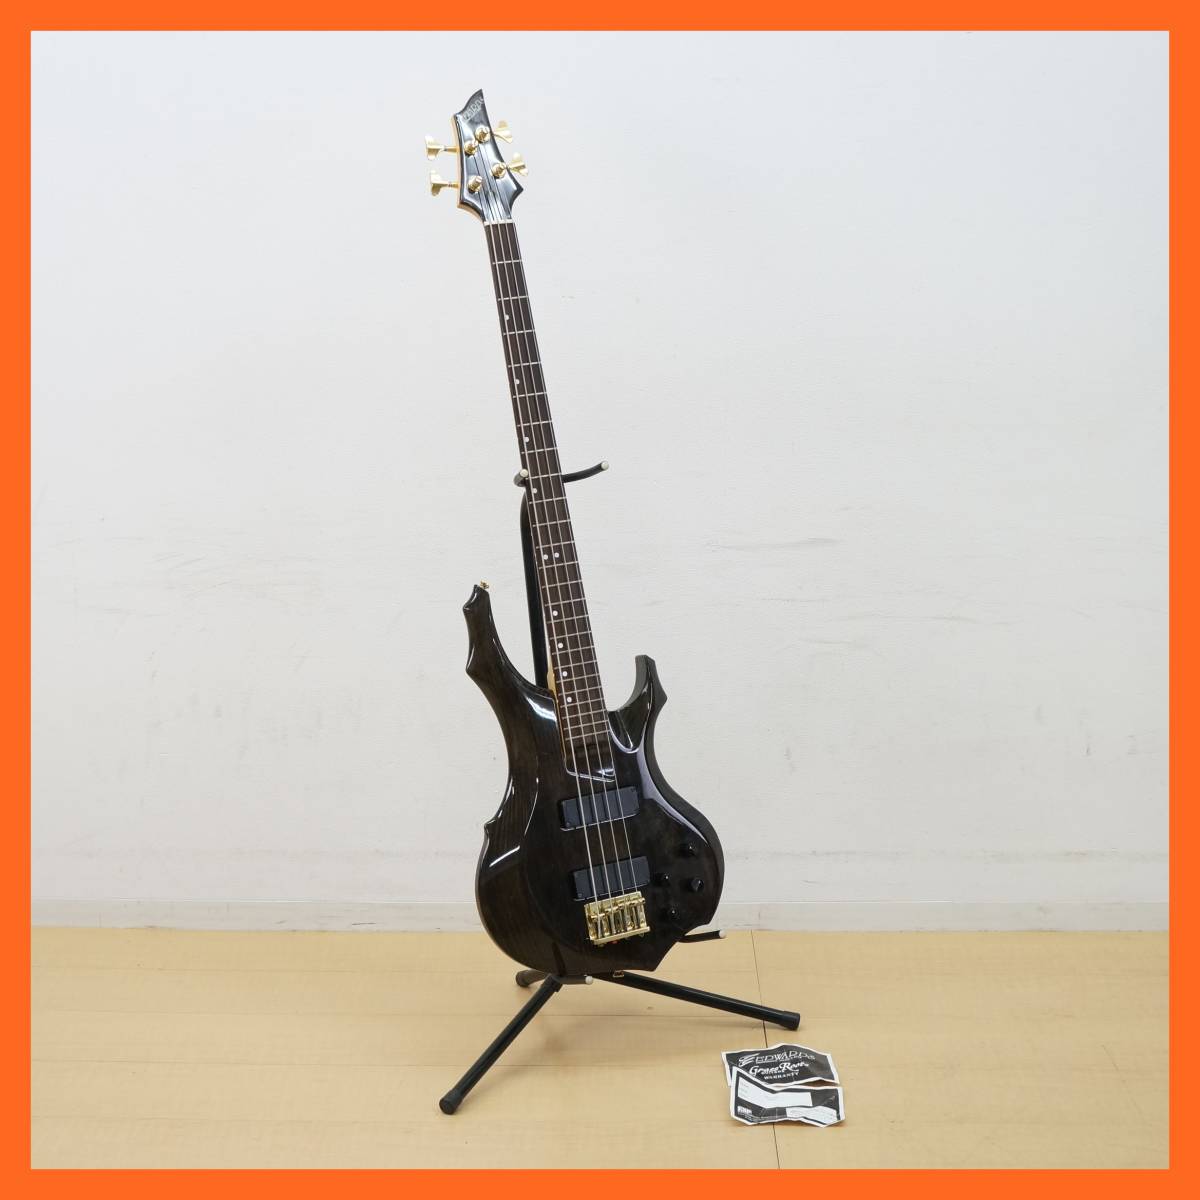  higashi is :[ESP]EDWARDS Edward base guitar EFR-95 STBK 4 string total length approximately 114.5.* free shipping *